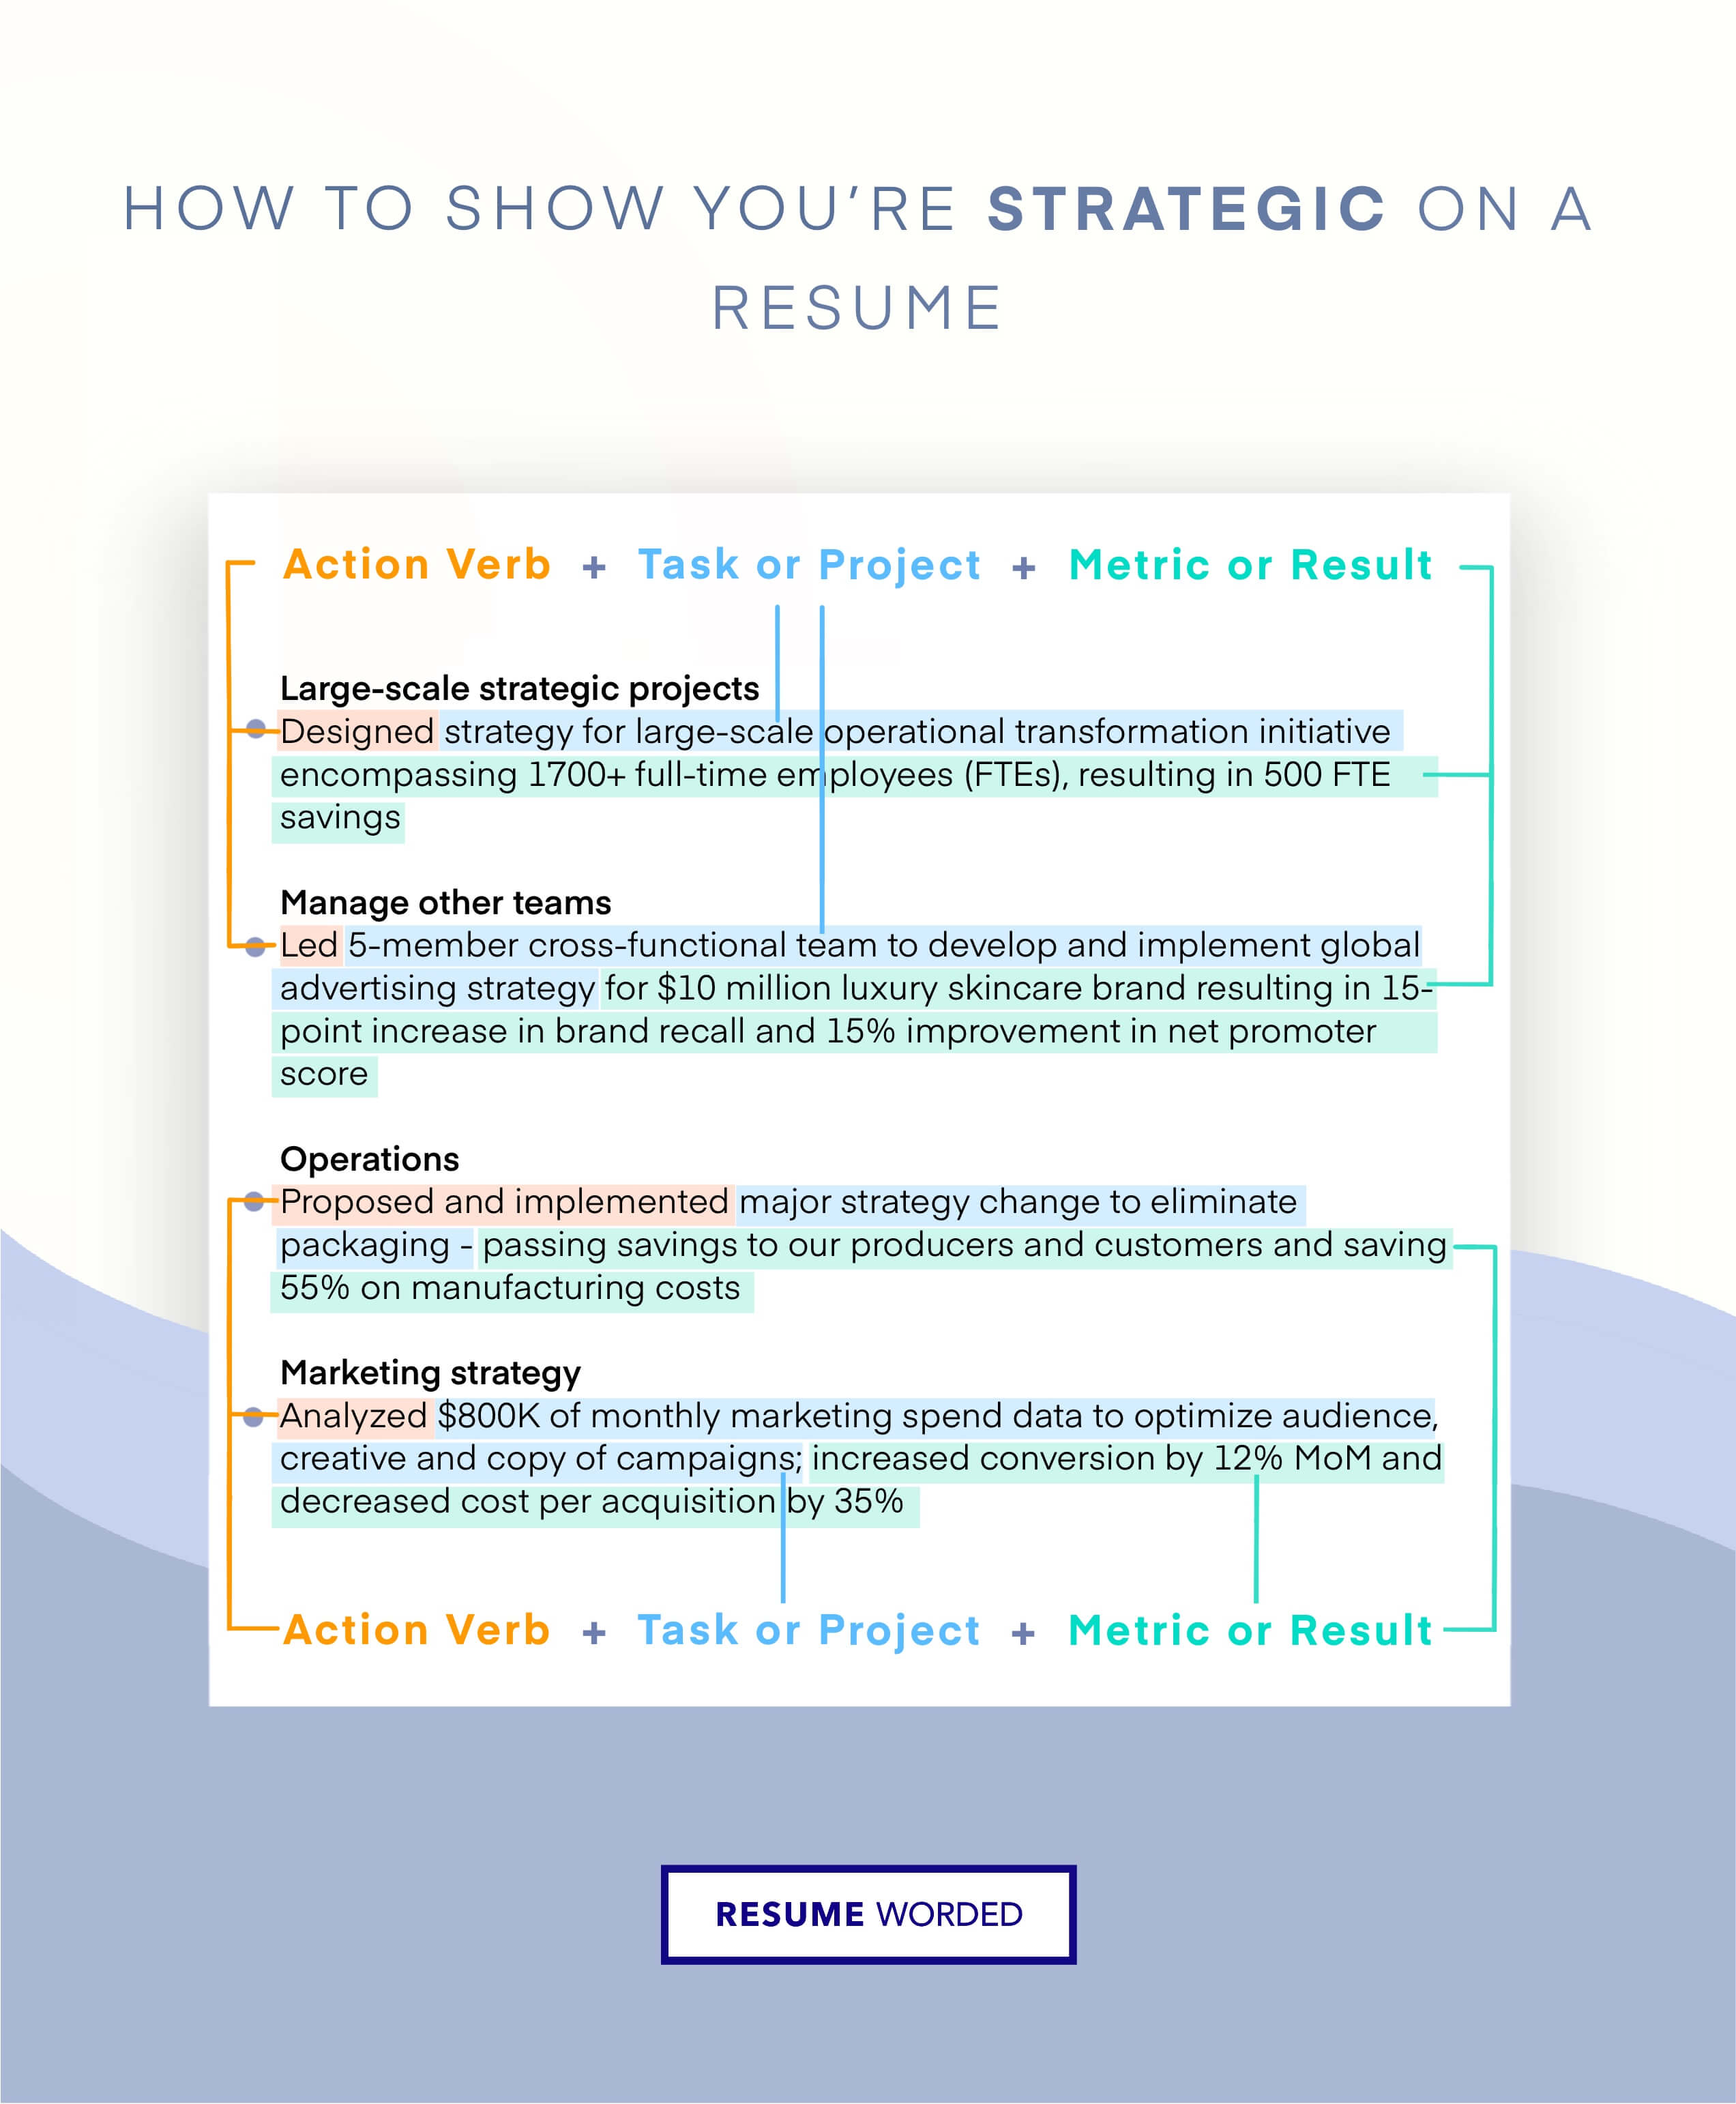 Showcase your strategic HR skills - Human Resources (HR) Manager CV